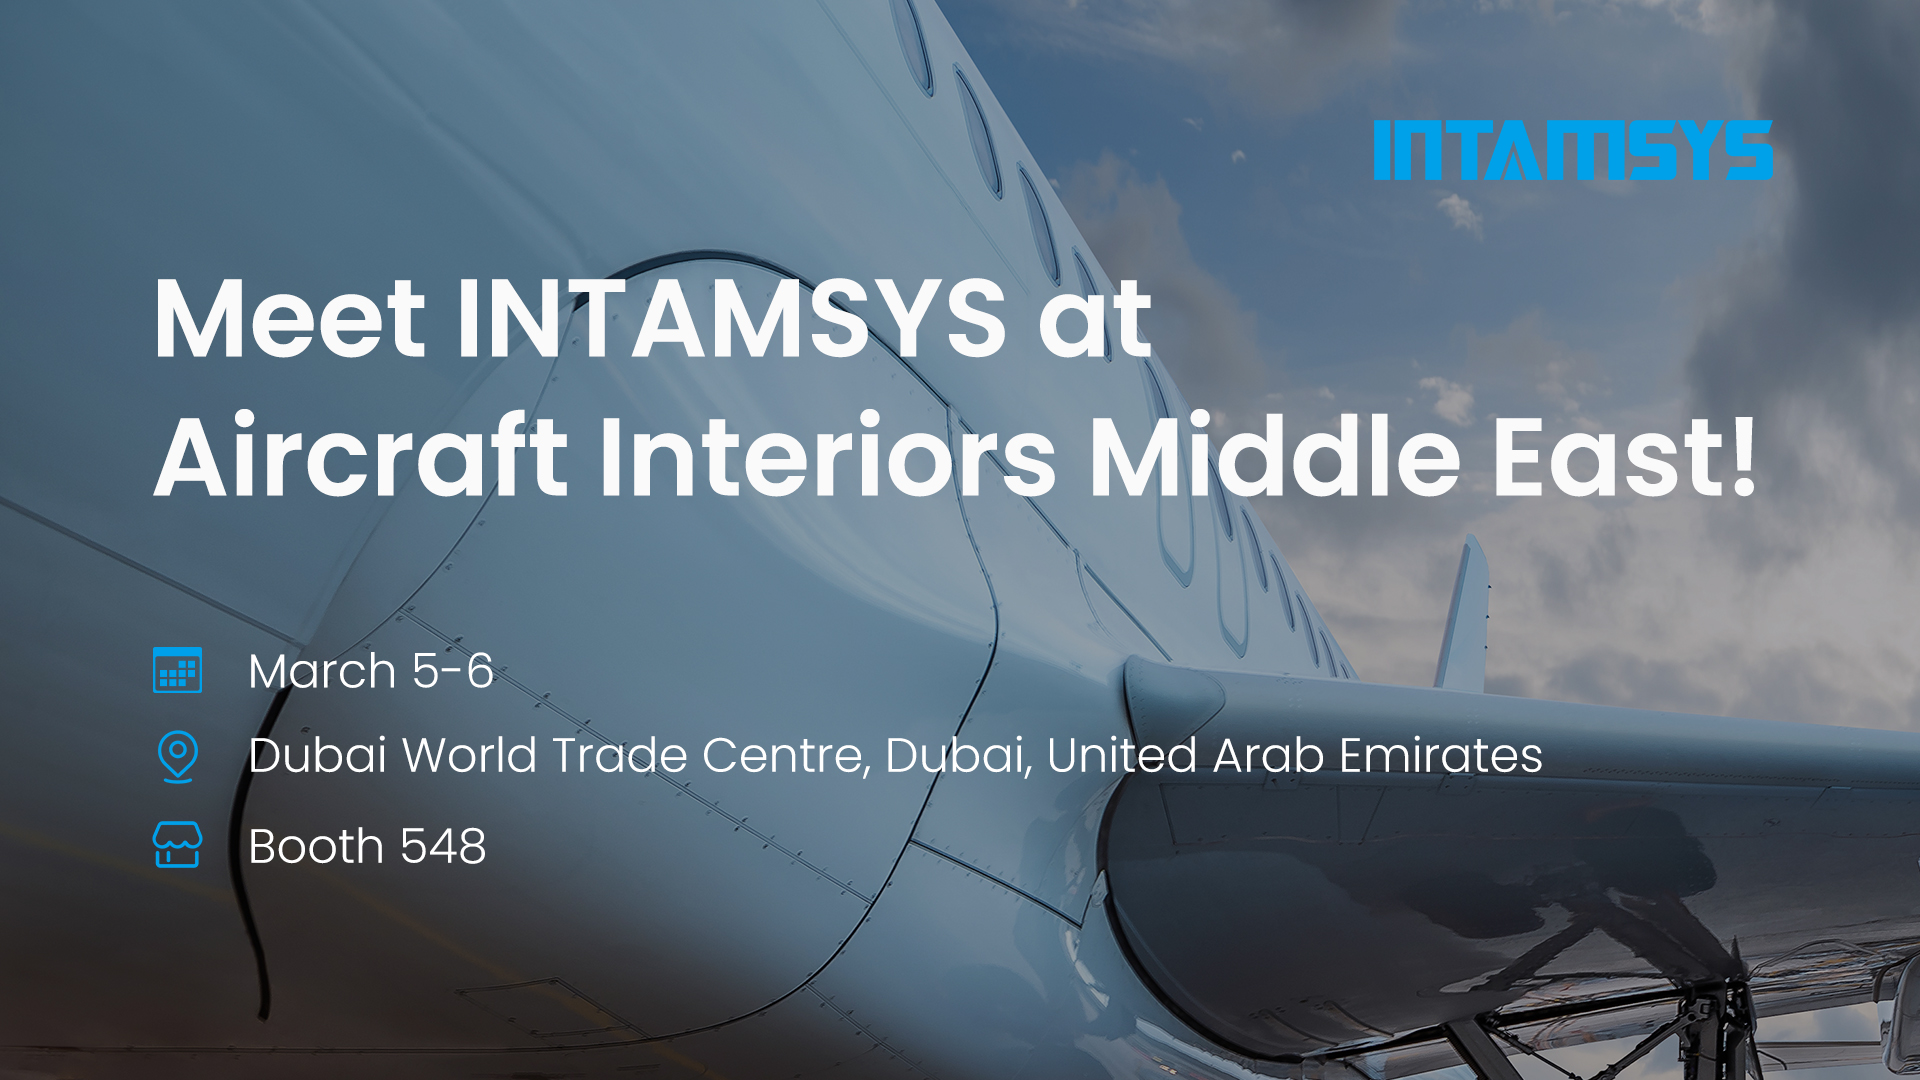 INTAMSYS Brings 3D Printing Solutions into the Aircraft Interiors World